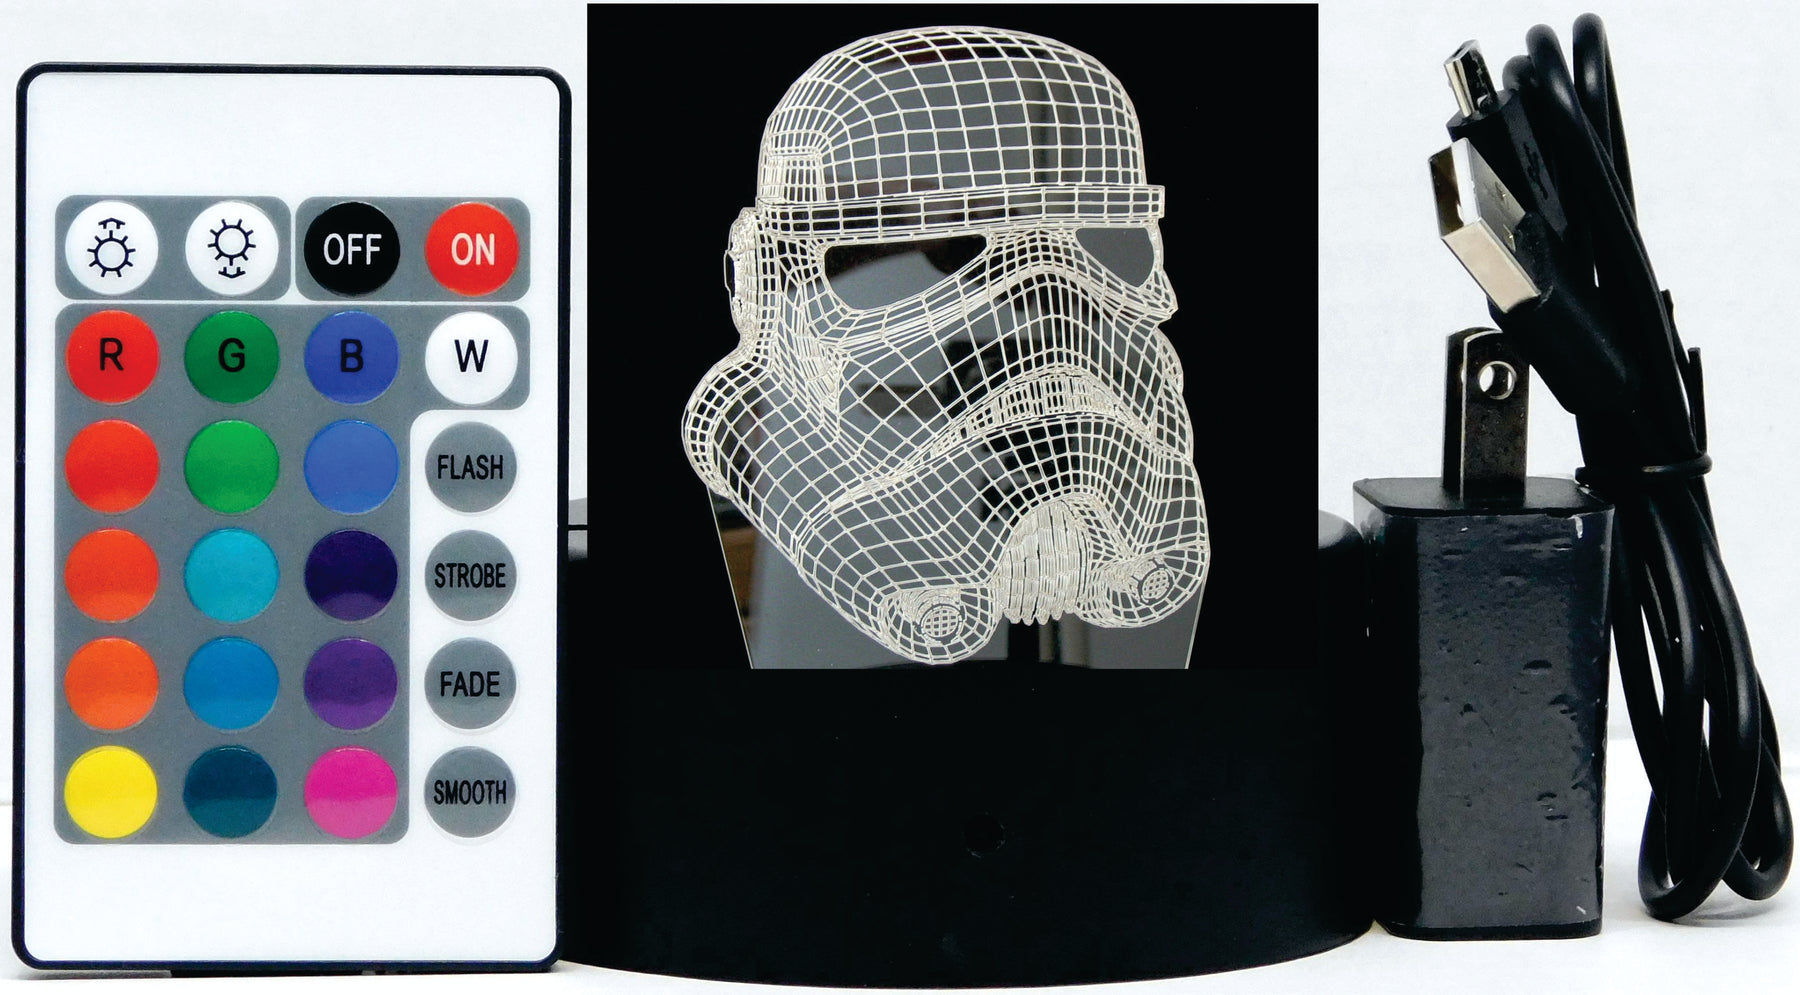 Storm Trooper's Helmet 3-D Optical Illusion LED Multicolored Lamp